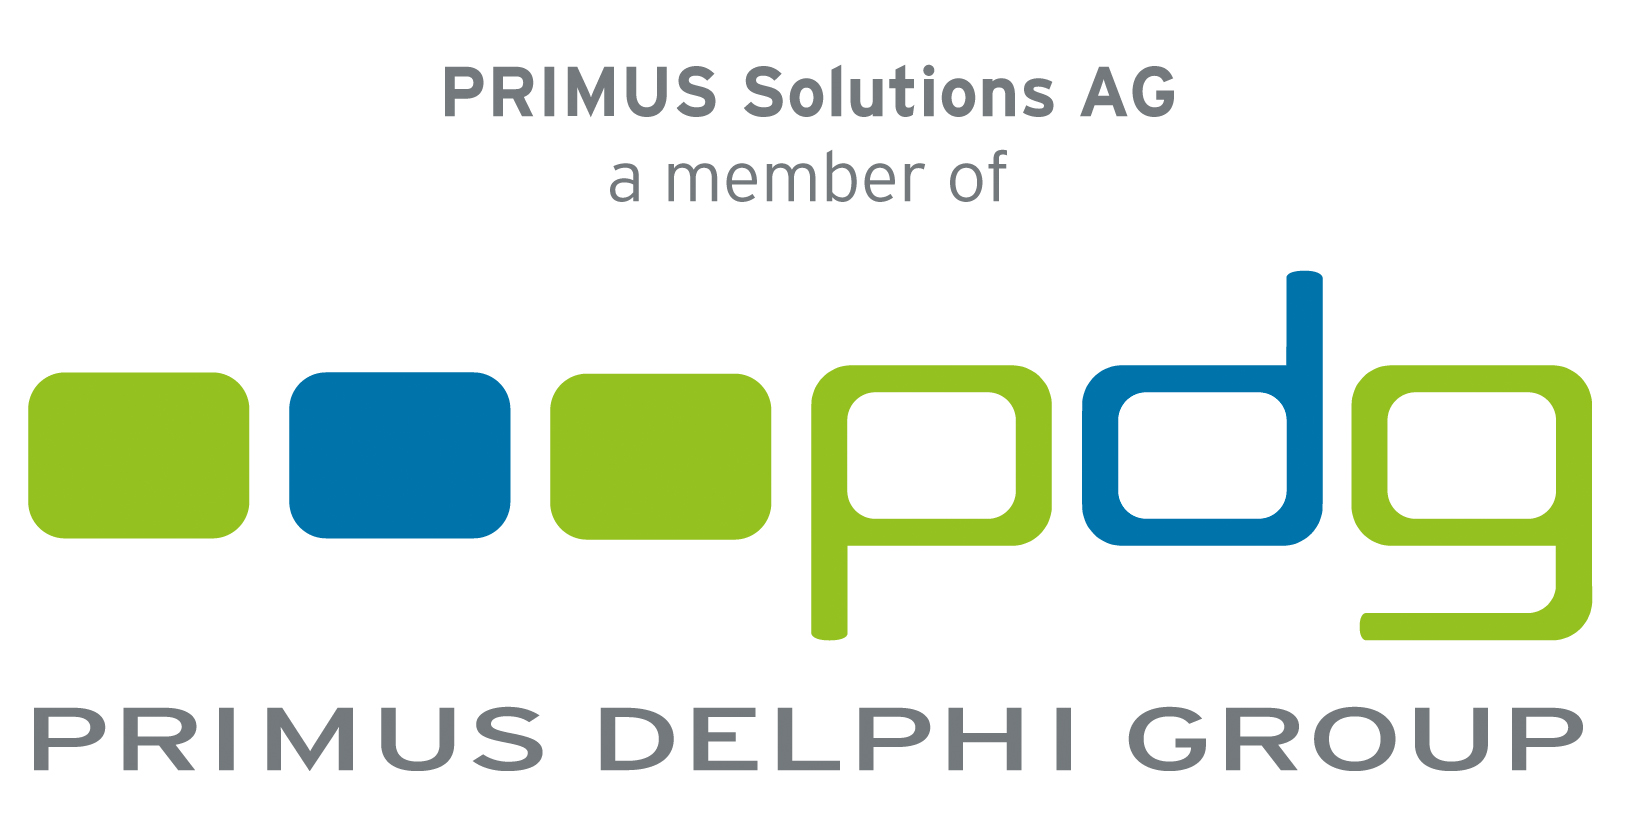 PRIMUS Solutions AG